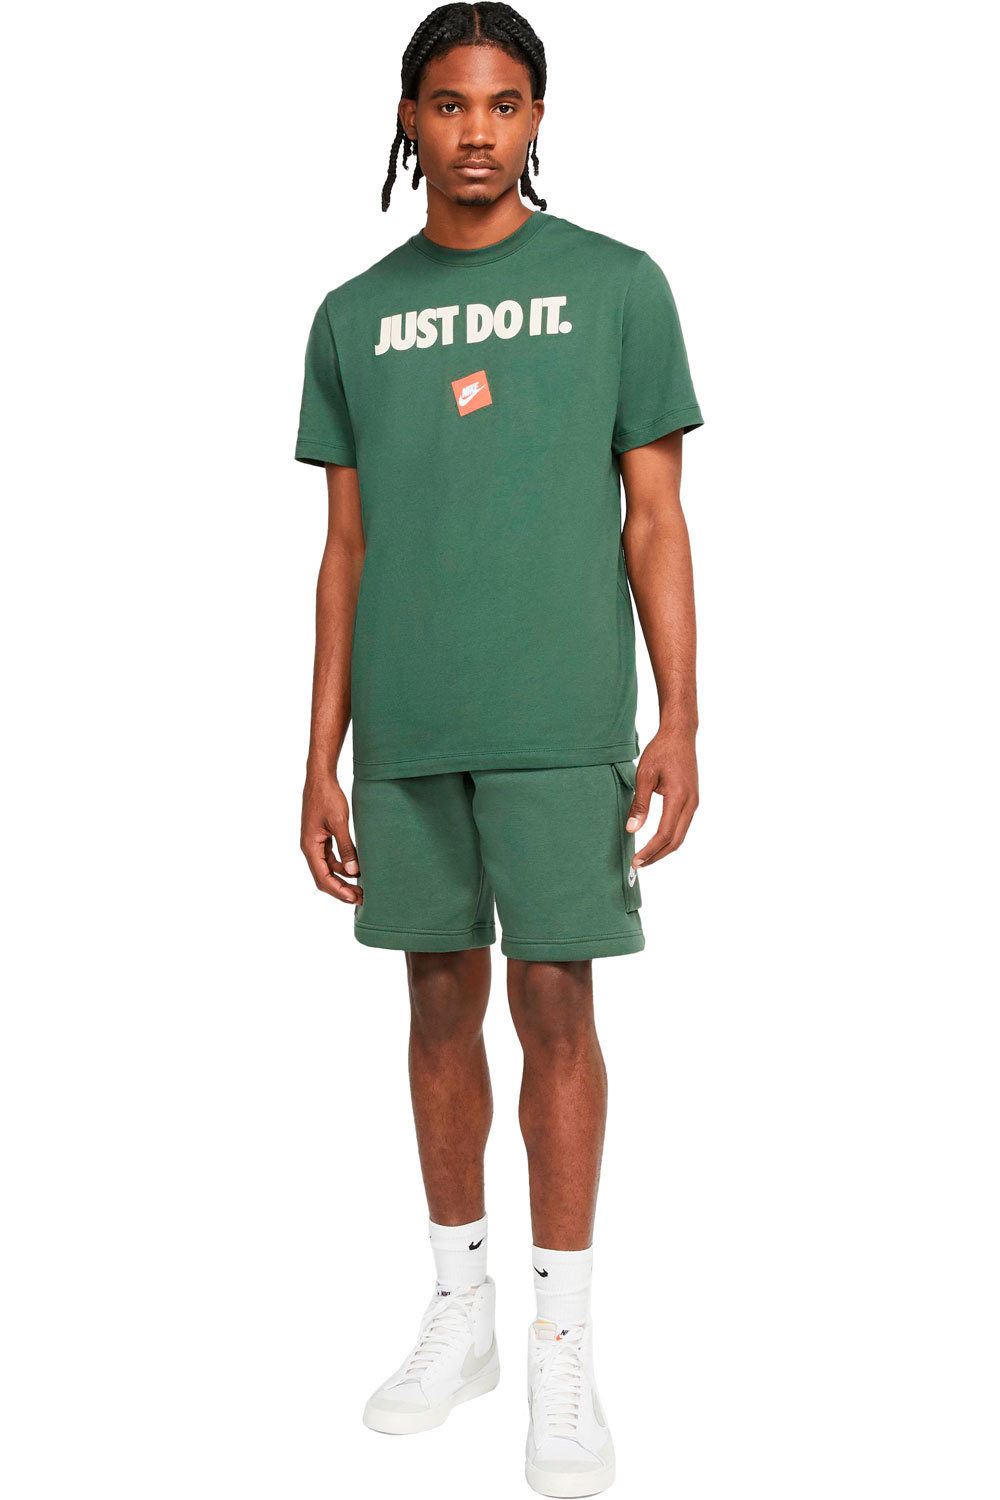 Nike camiseta manga corta hombre M NSW TEE JDI 12 MONTH 03